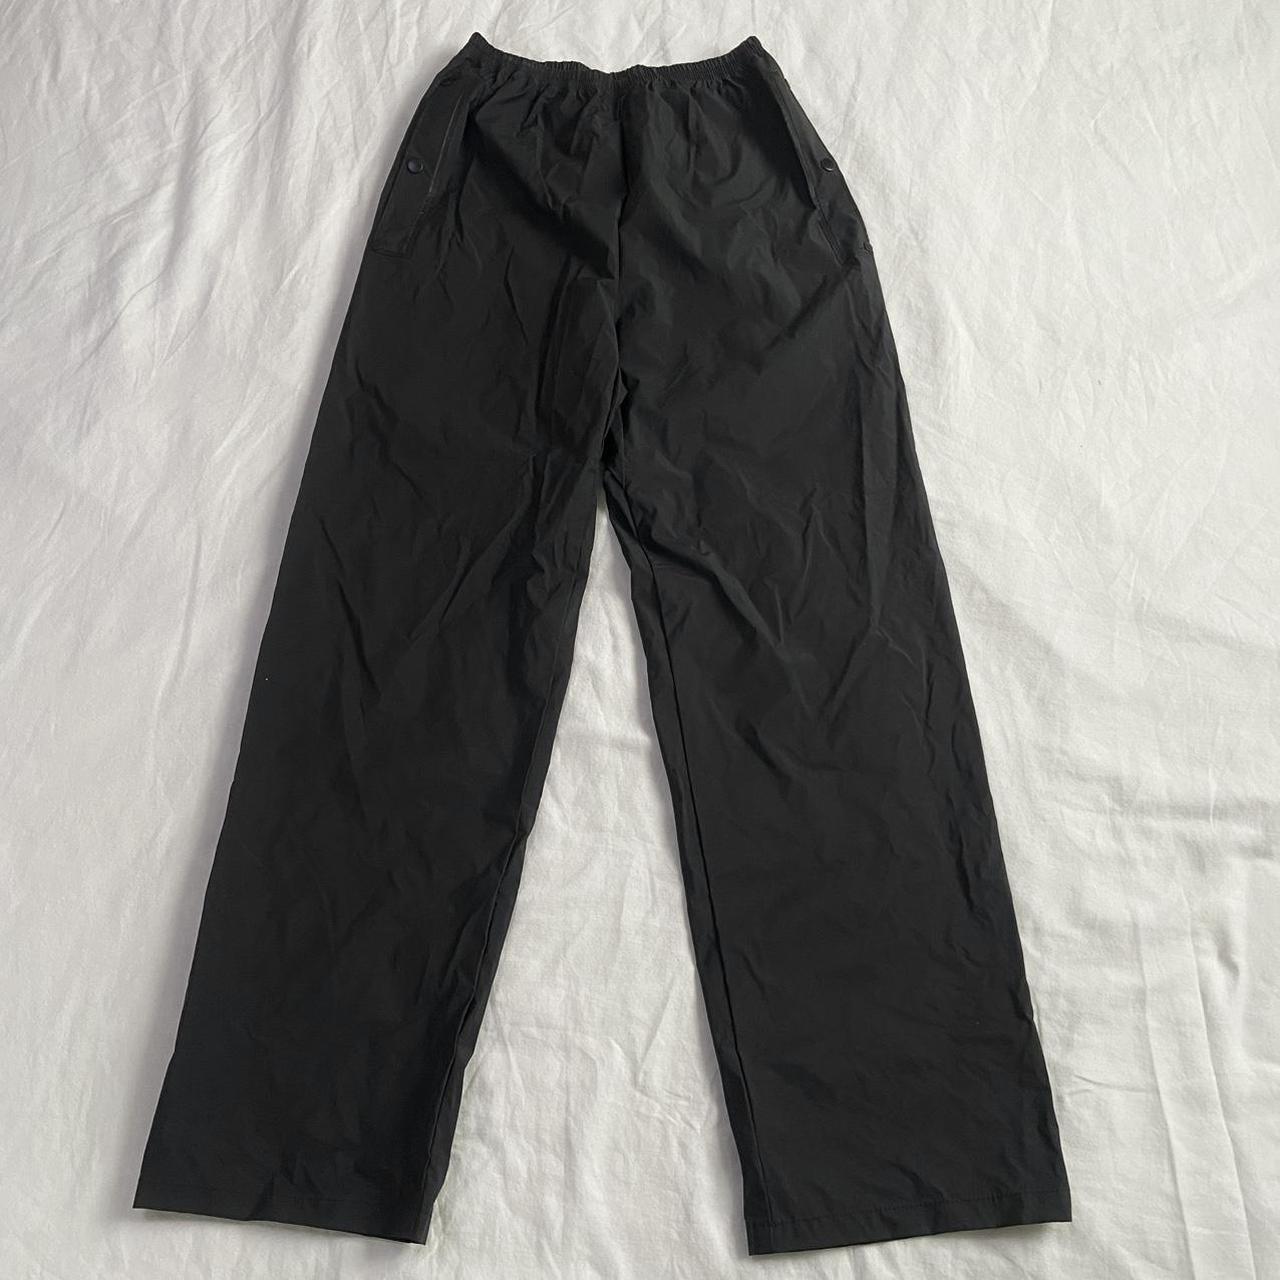 Columbia PVC Pants A pair of black 100% PVC water... - Depop